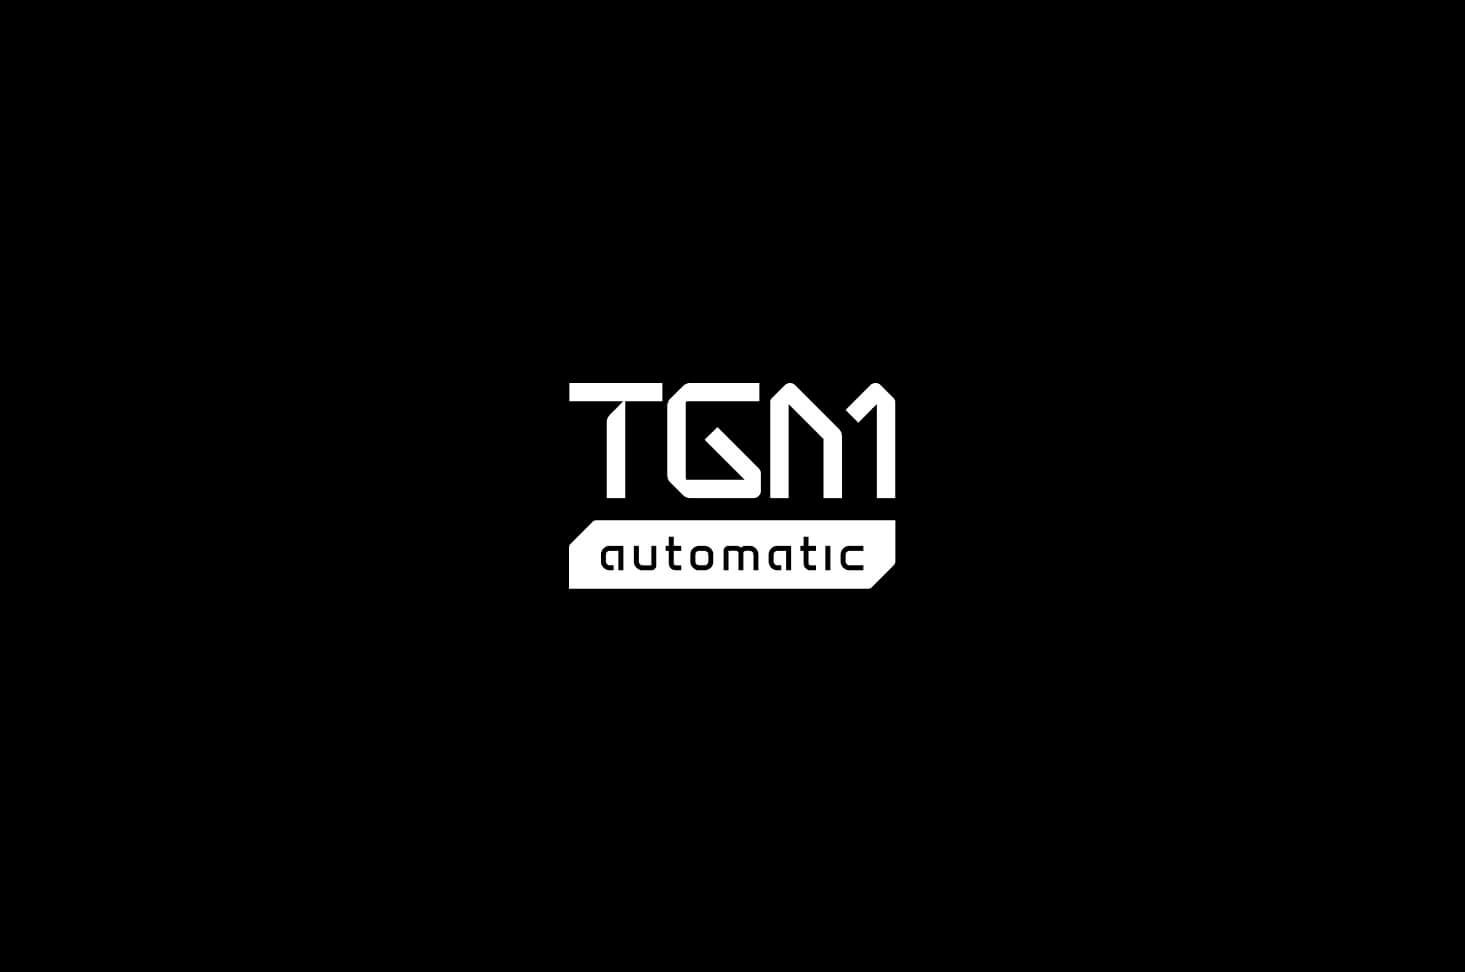 tgm-automatic-logo2.jpg